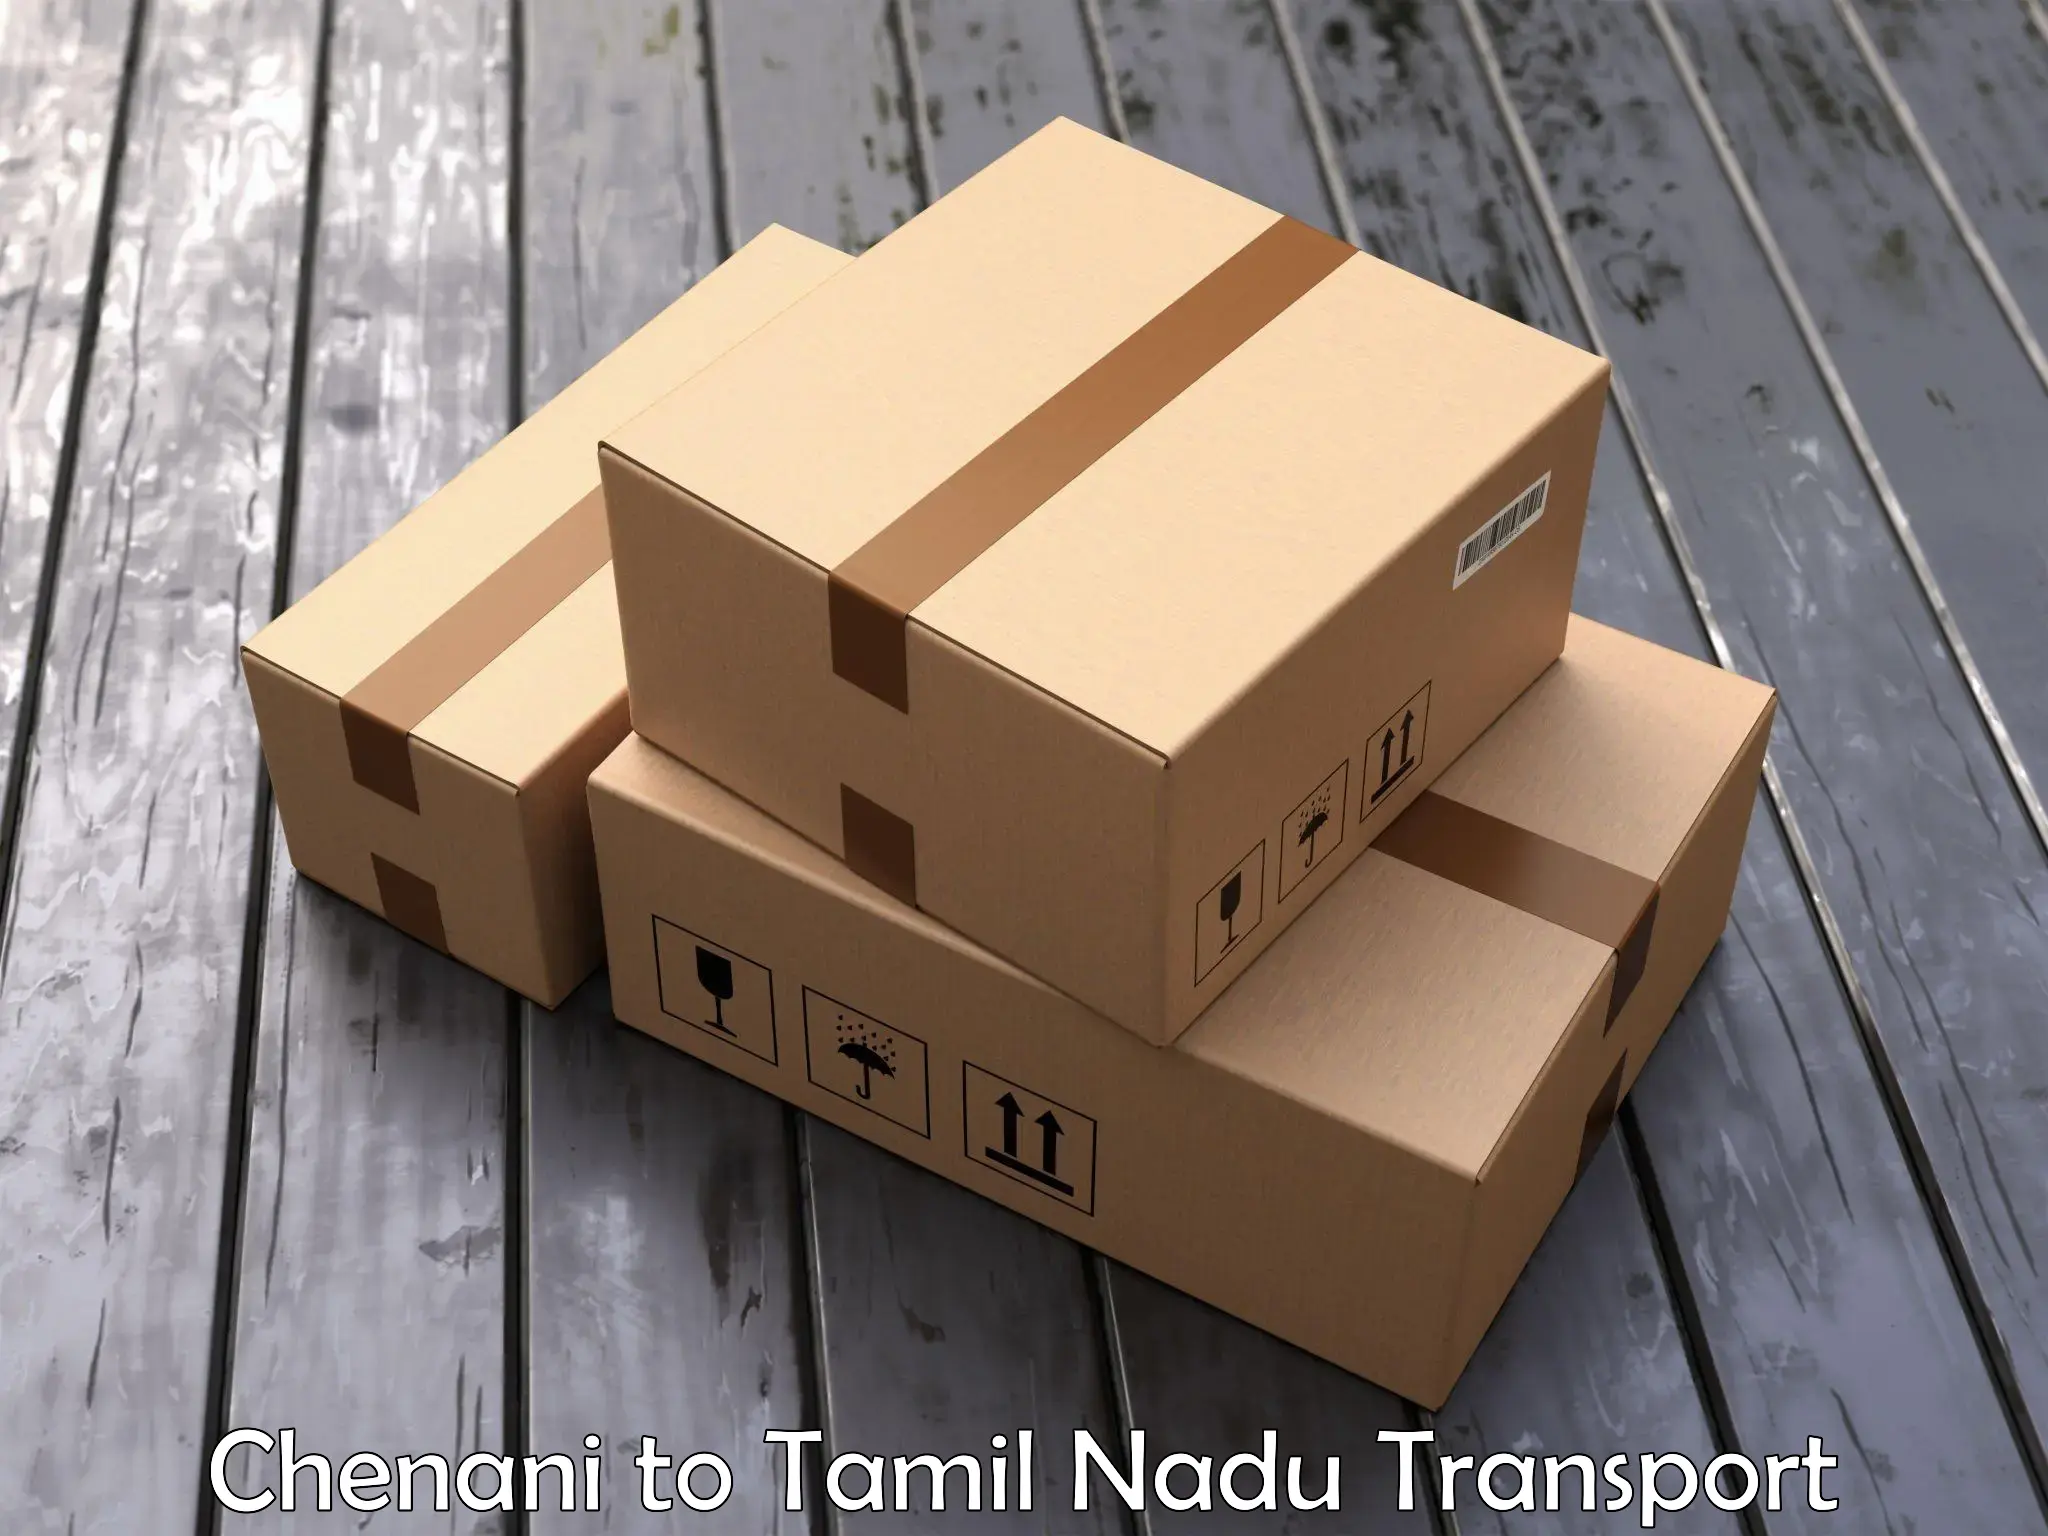 Online transport service Chenani to Chennai